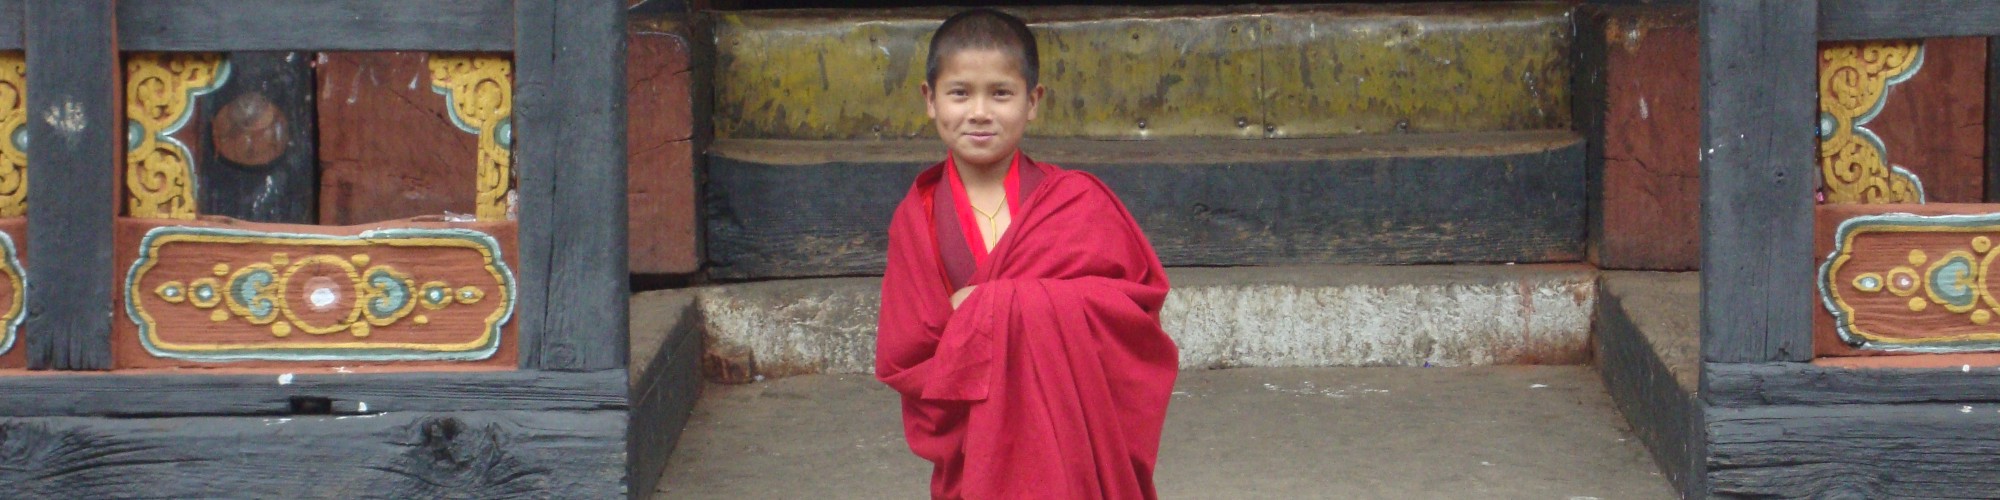 monk in bhutan